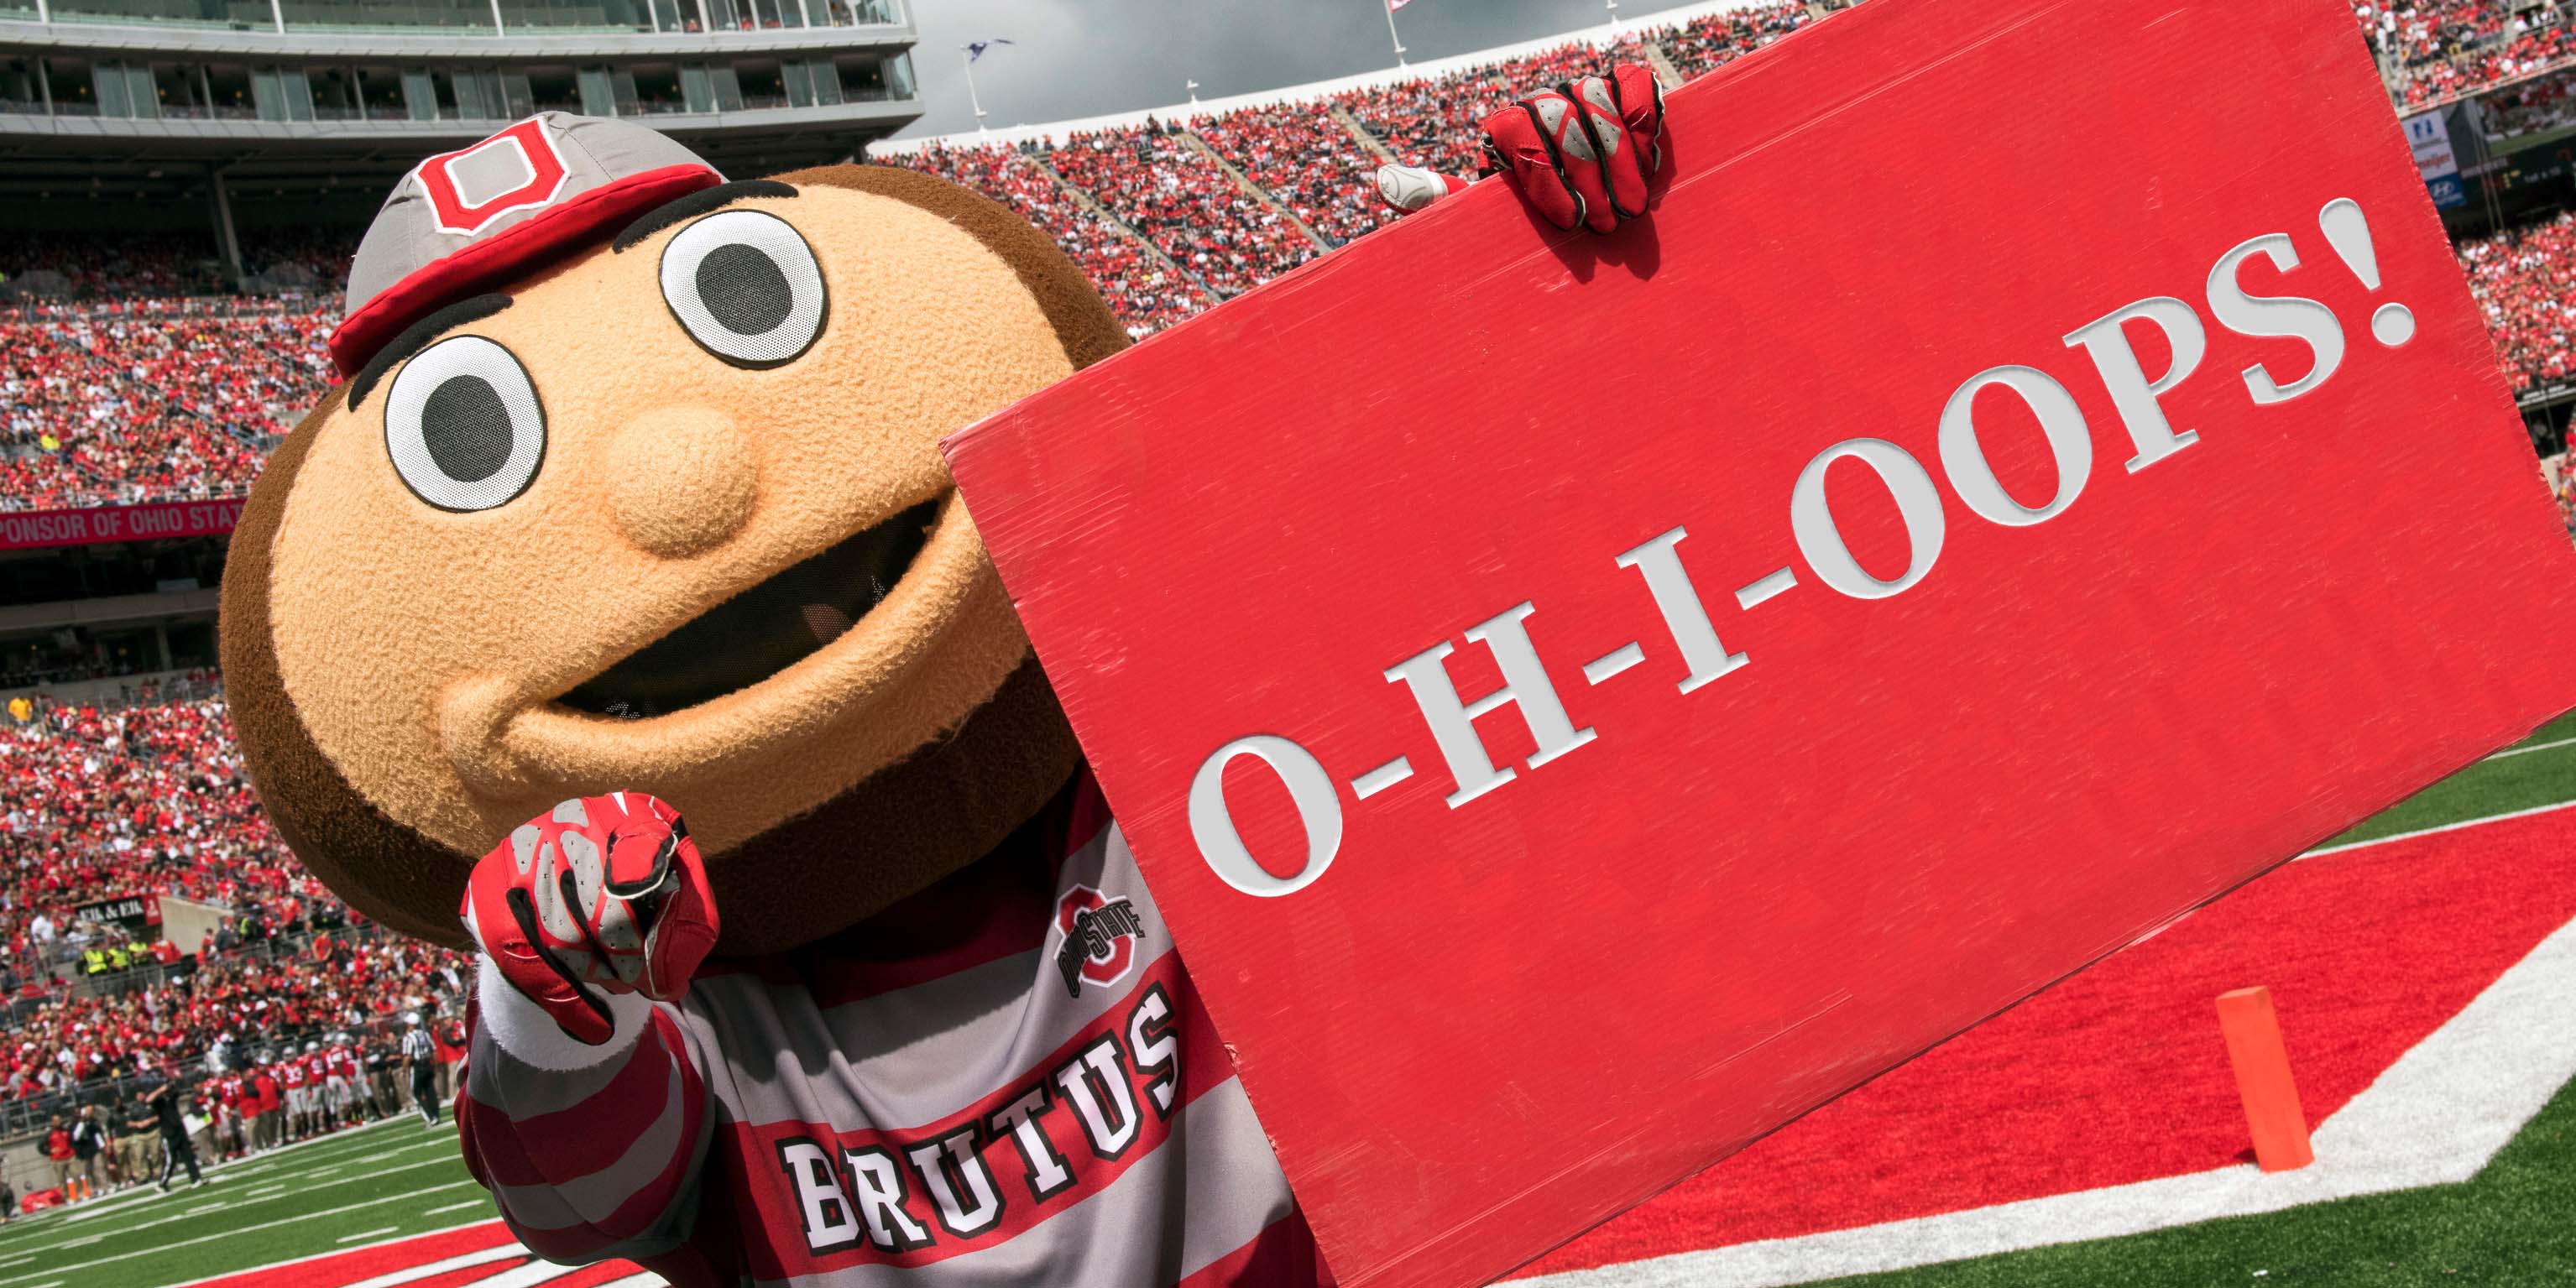 Brutus Buckeye holding a sign saying "O-H-I-Oops"